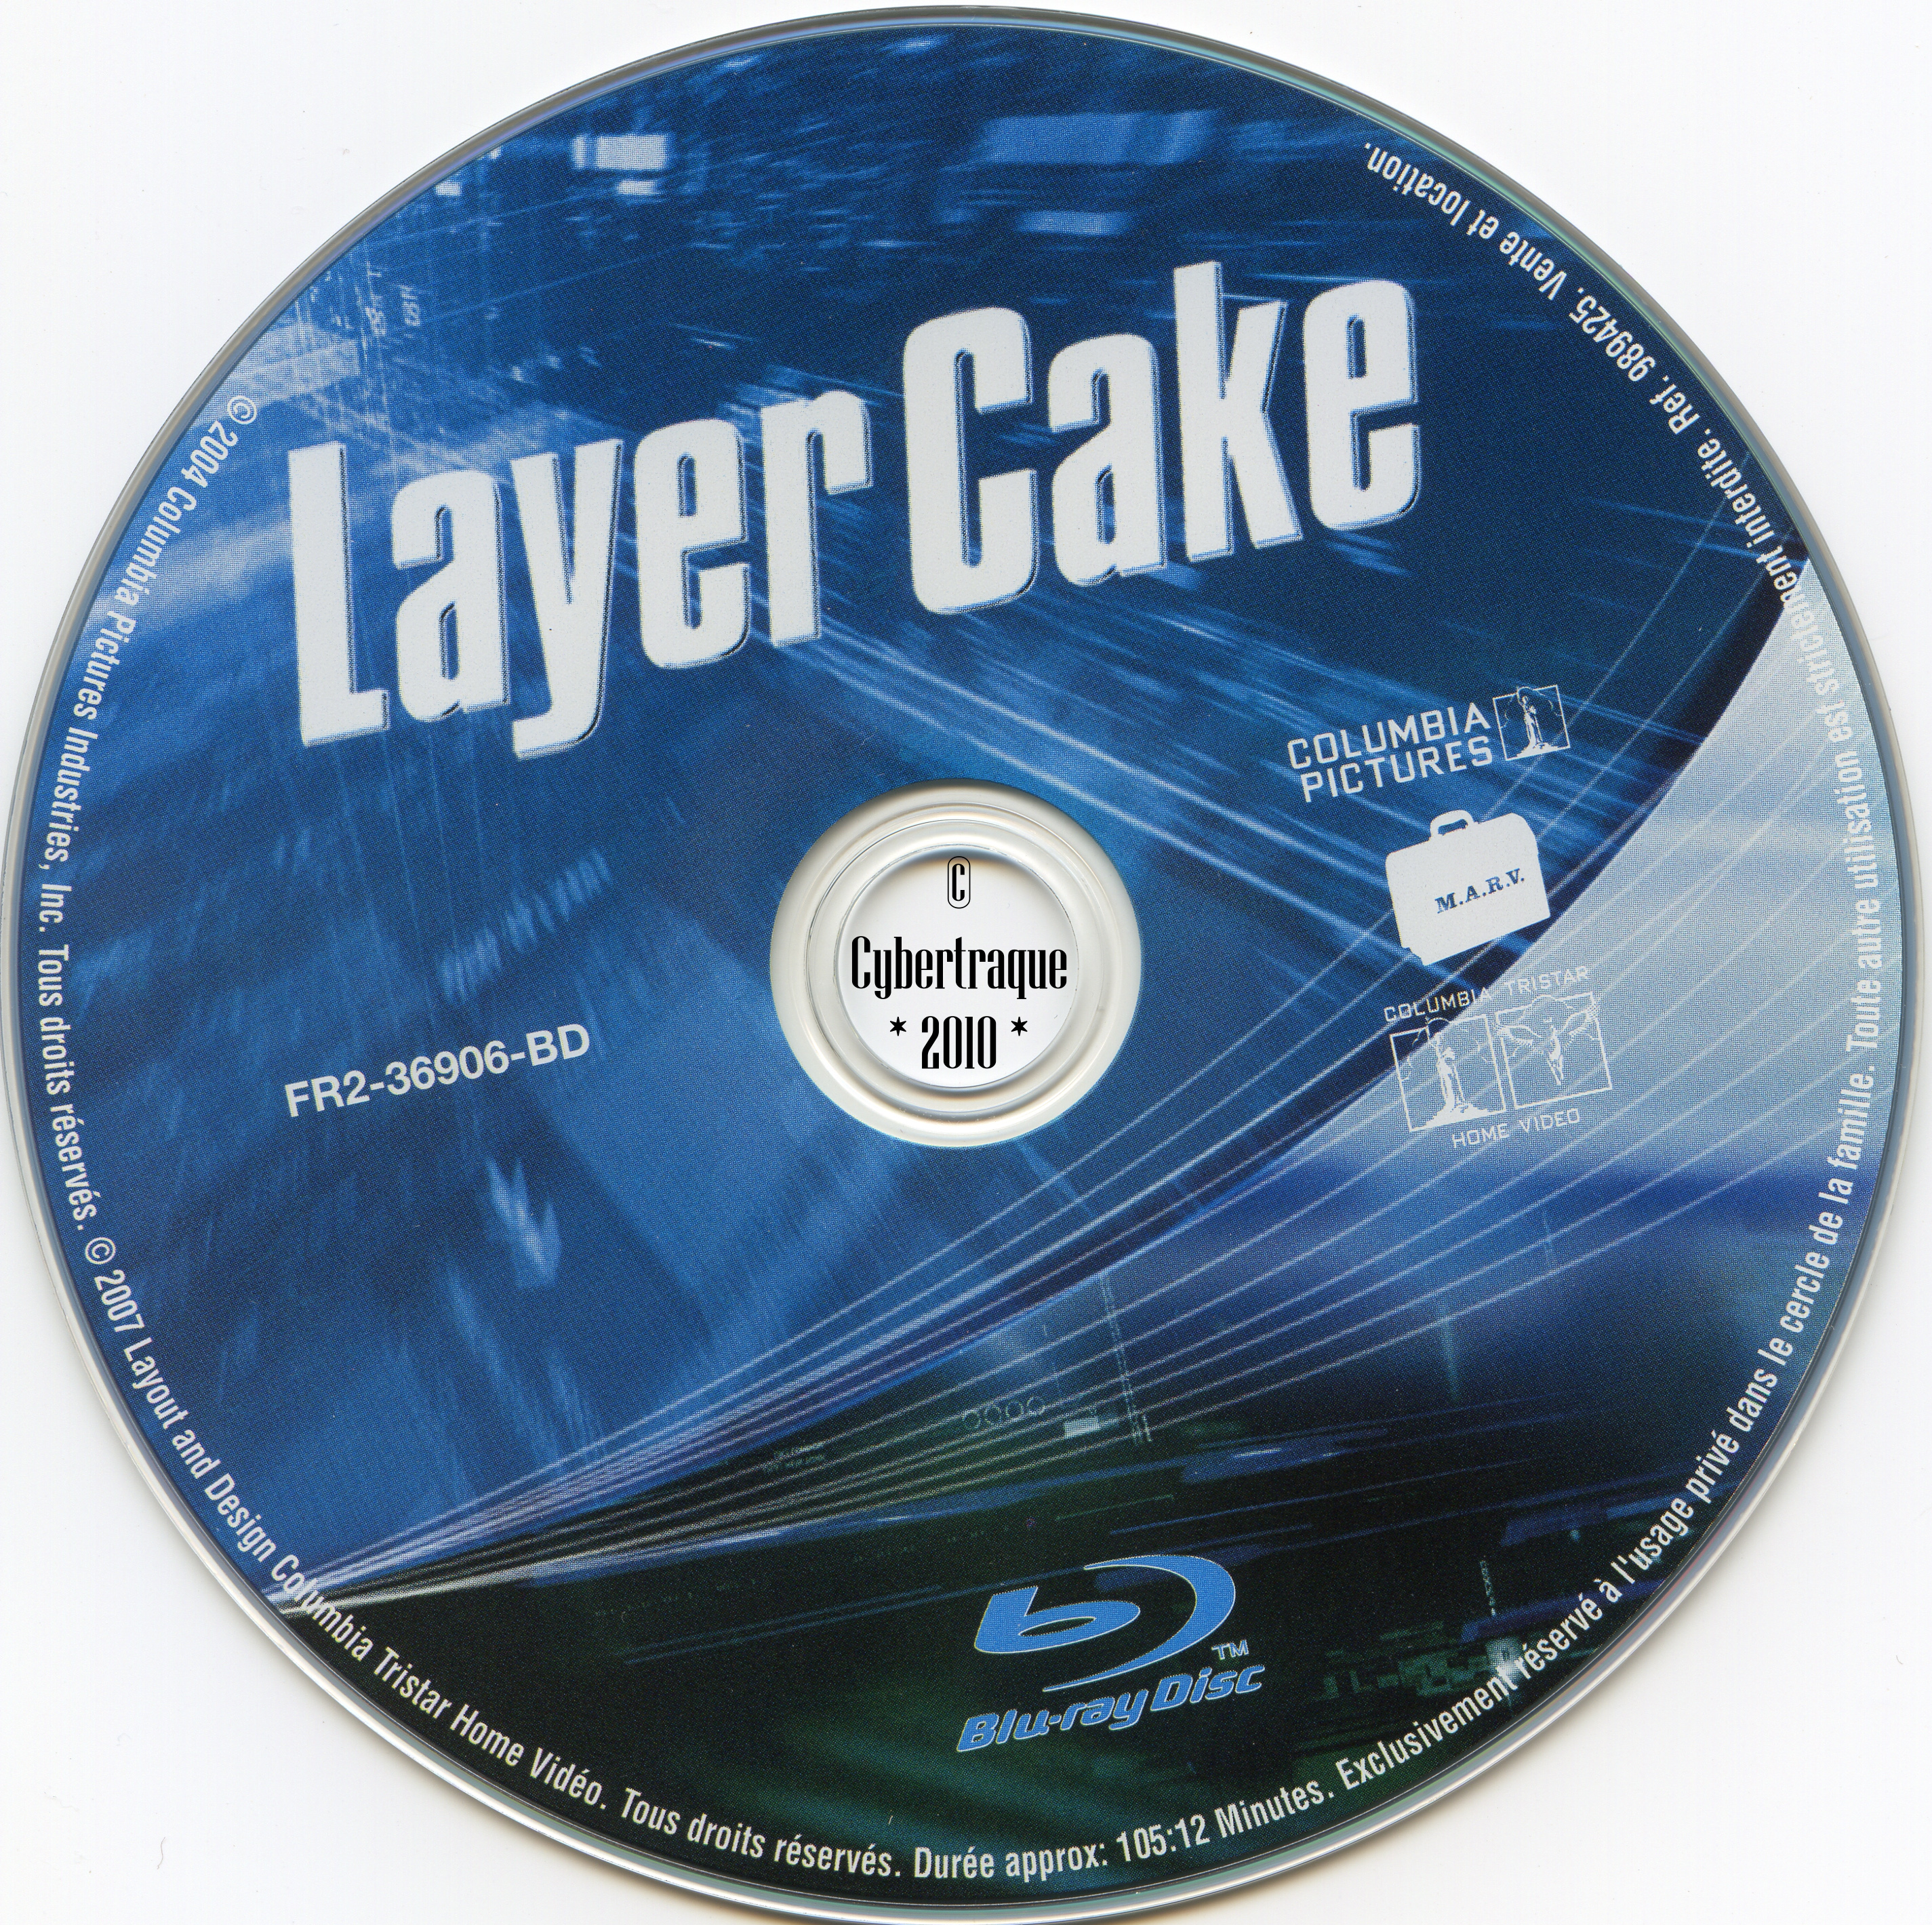 Layer cake (BLU-RAY)